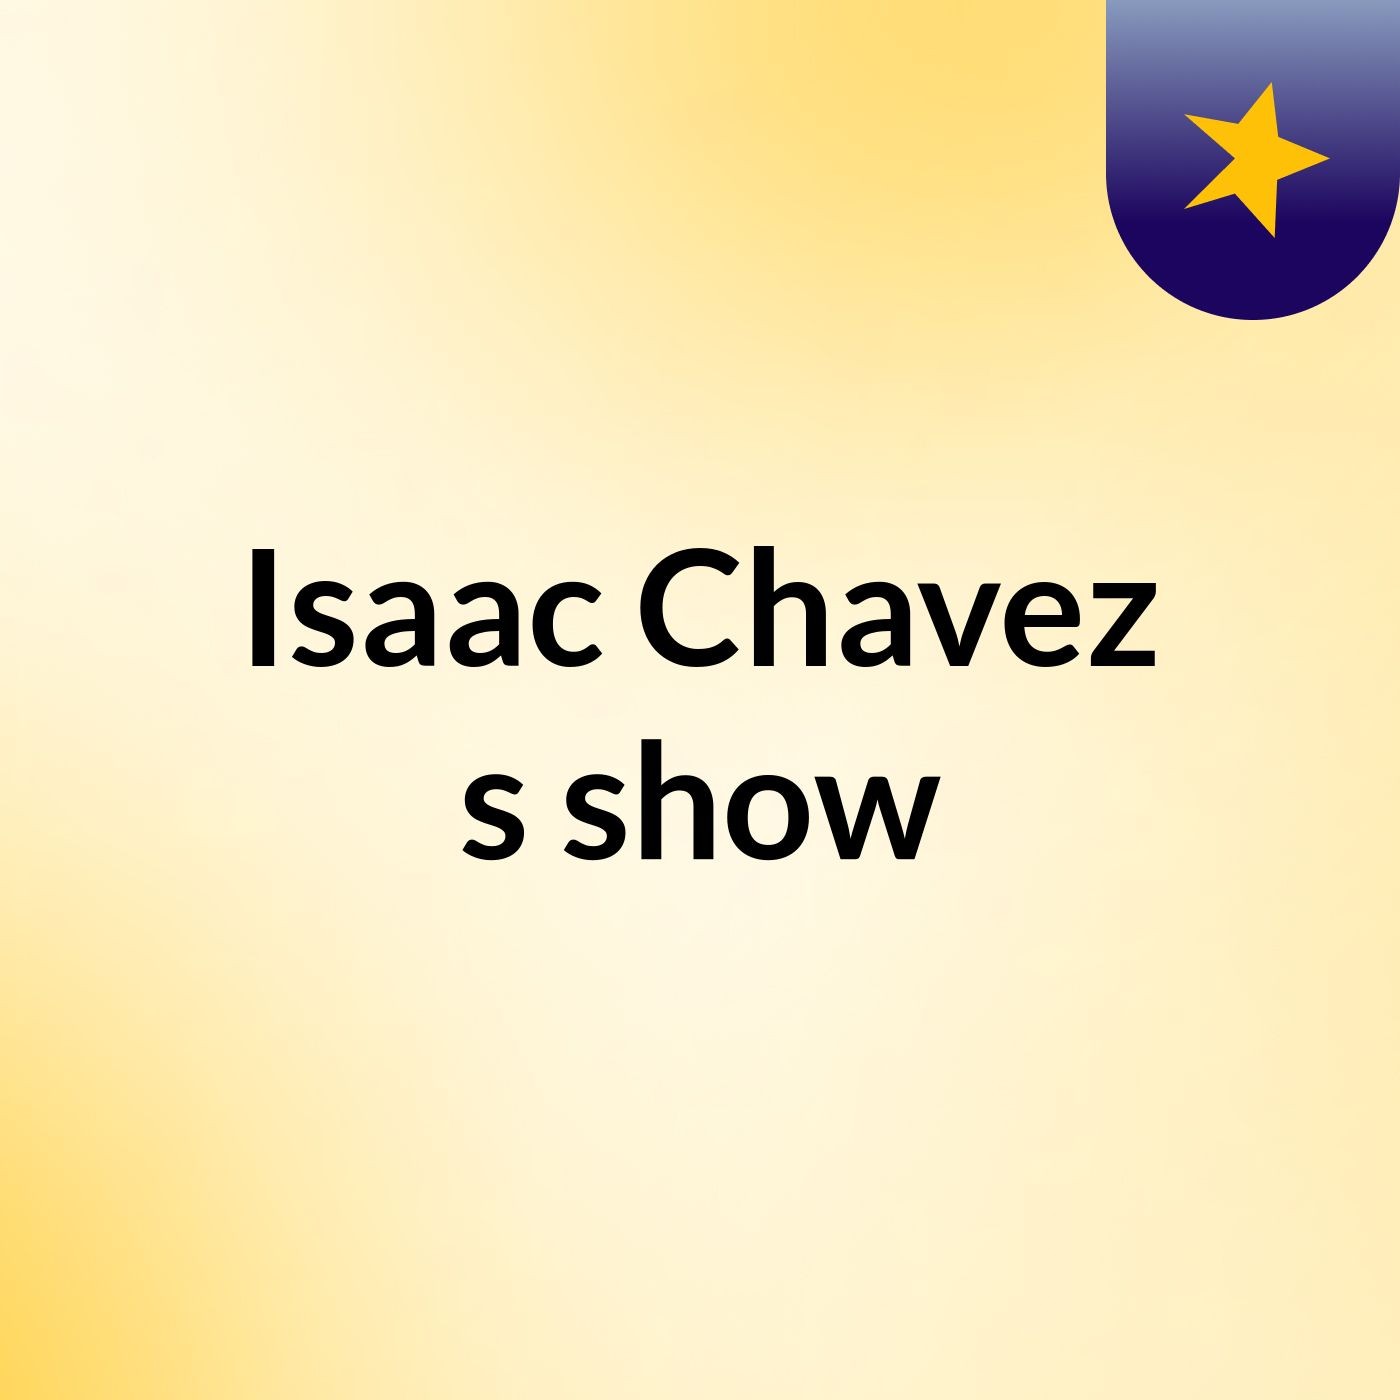 Isaac Chavez's show